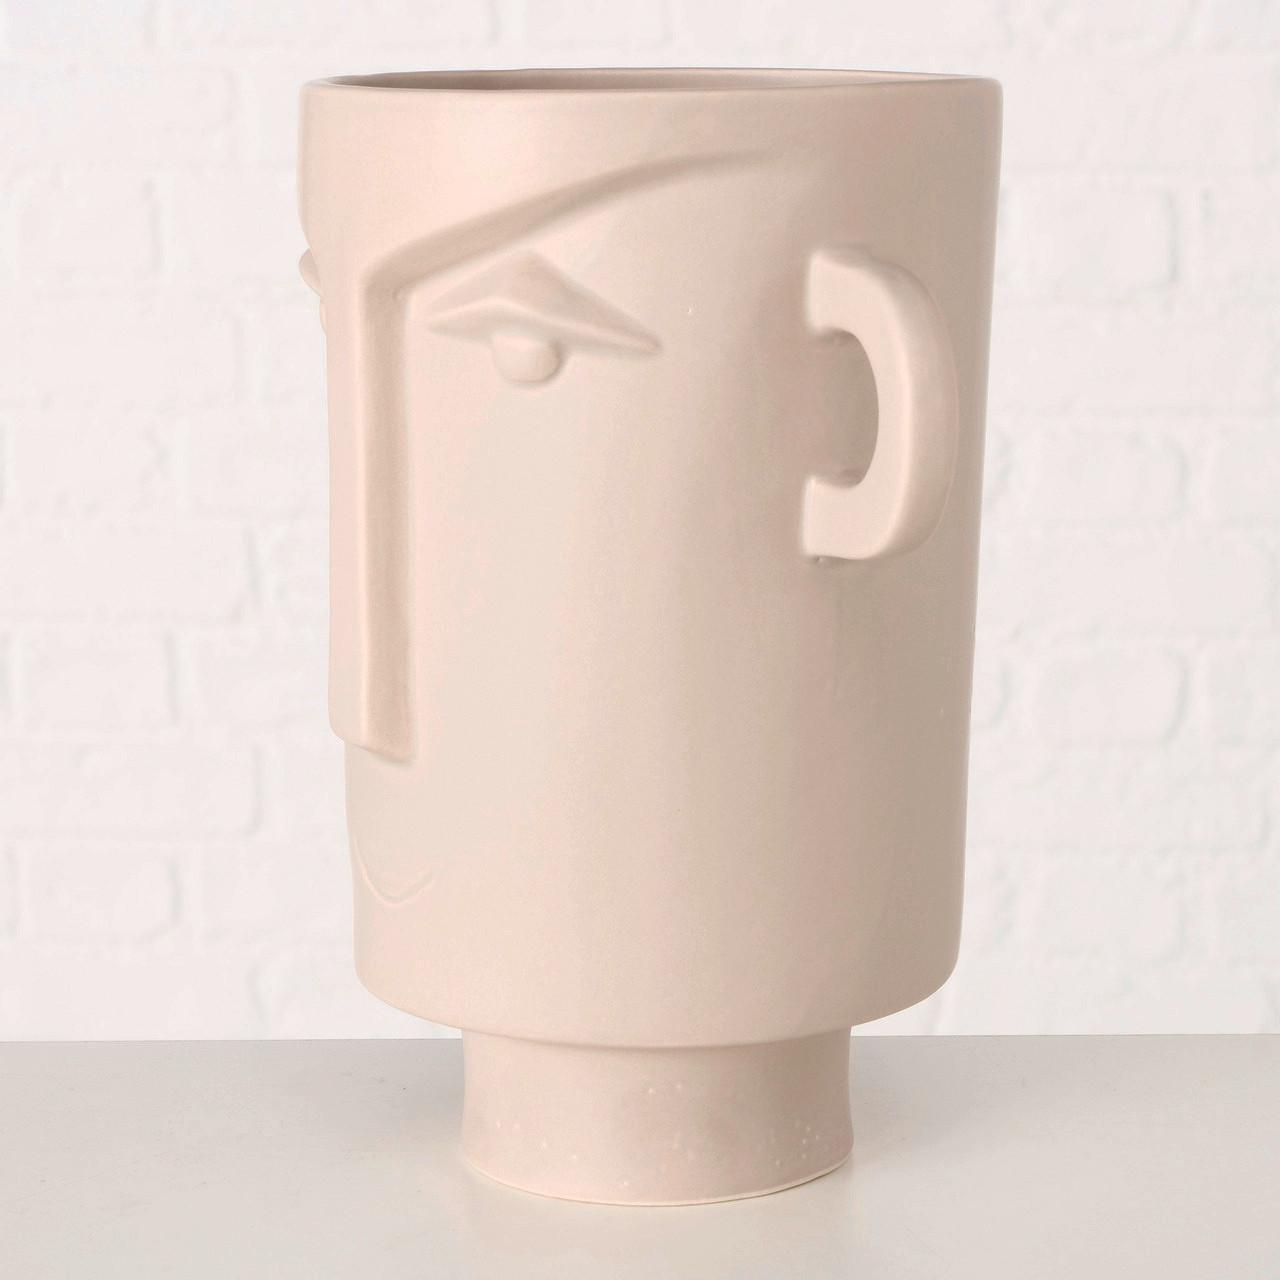 Cvetlični Lonček Brosyo I -Paz- - bež, Moderno, keramika (22/15cm) - Modern Living